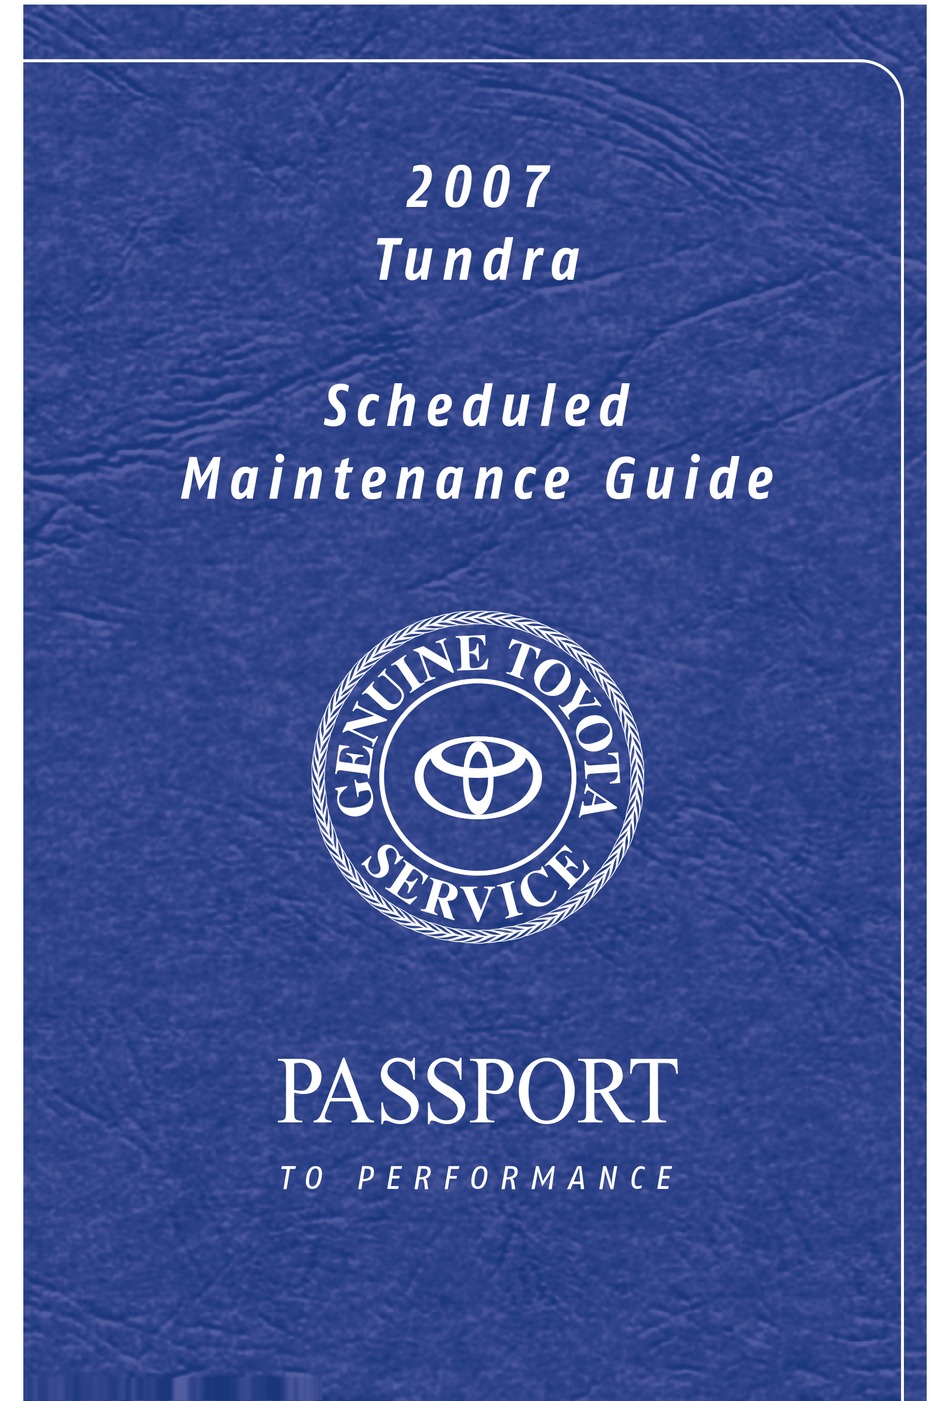 TOYOTA 2007 TUNDRA SCHEDULED MAINTENANCE MANUAL Pdf Download | ManualsLib